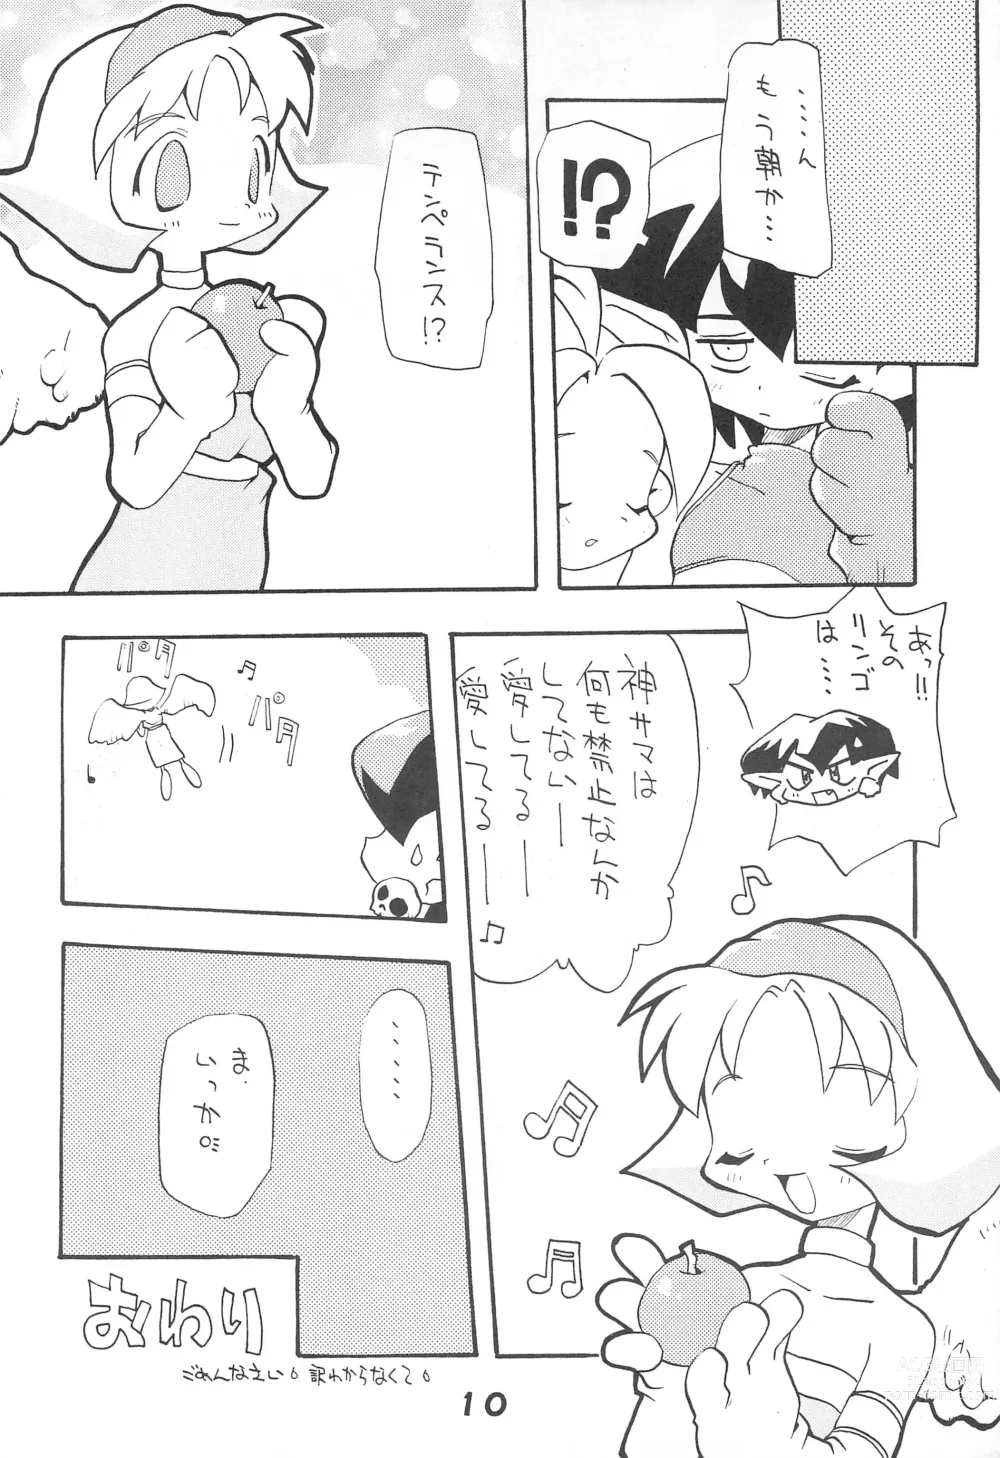 Page 10 of doujinshi MAGICAL BACK DROP